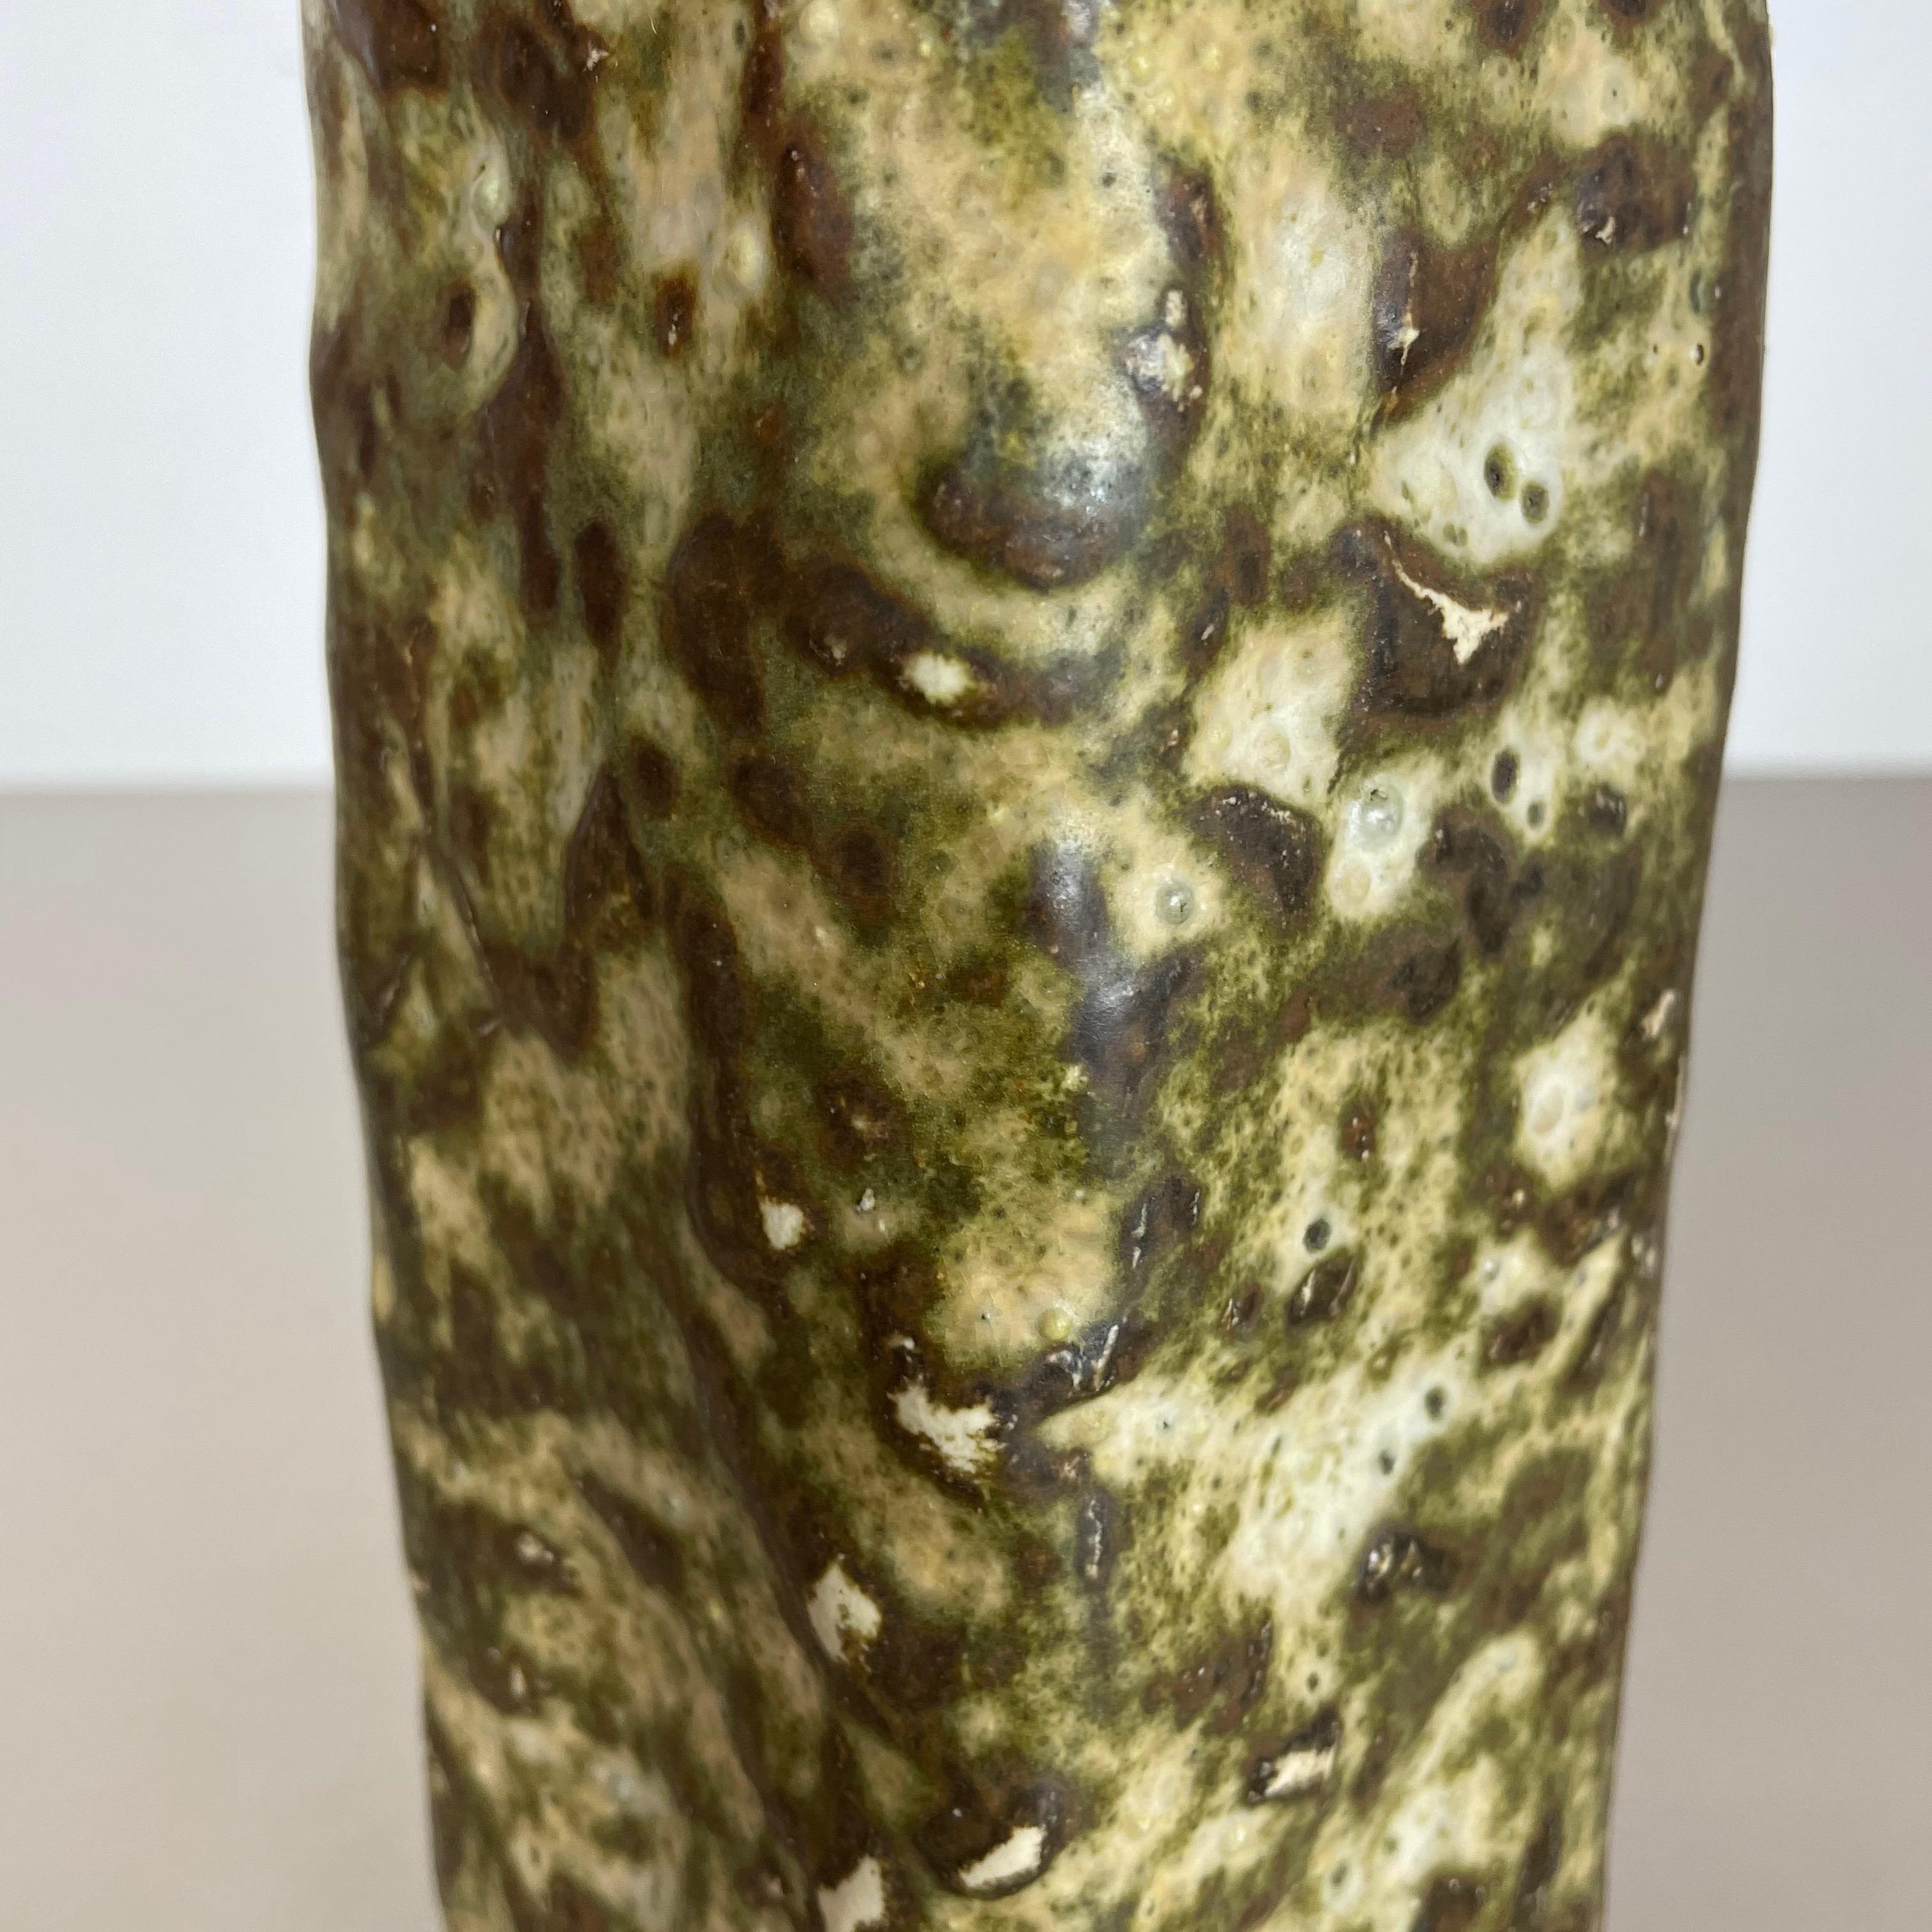 Original 1960 Ceramic Studio Pottery Vase by Piet Knepper for Mobach Netherlands For Sale 1